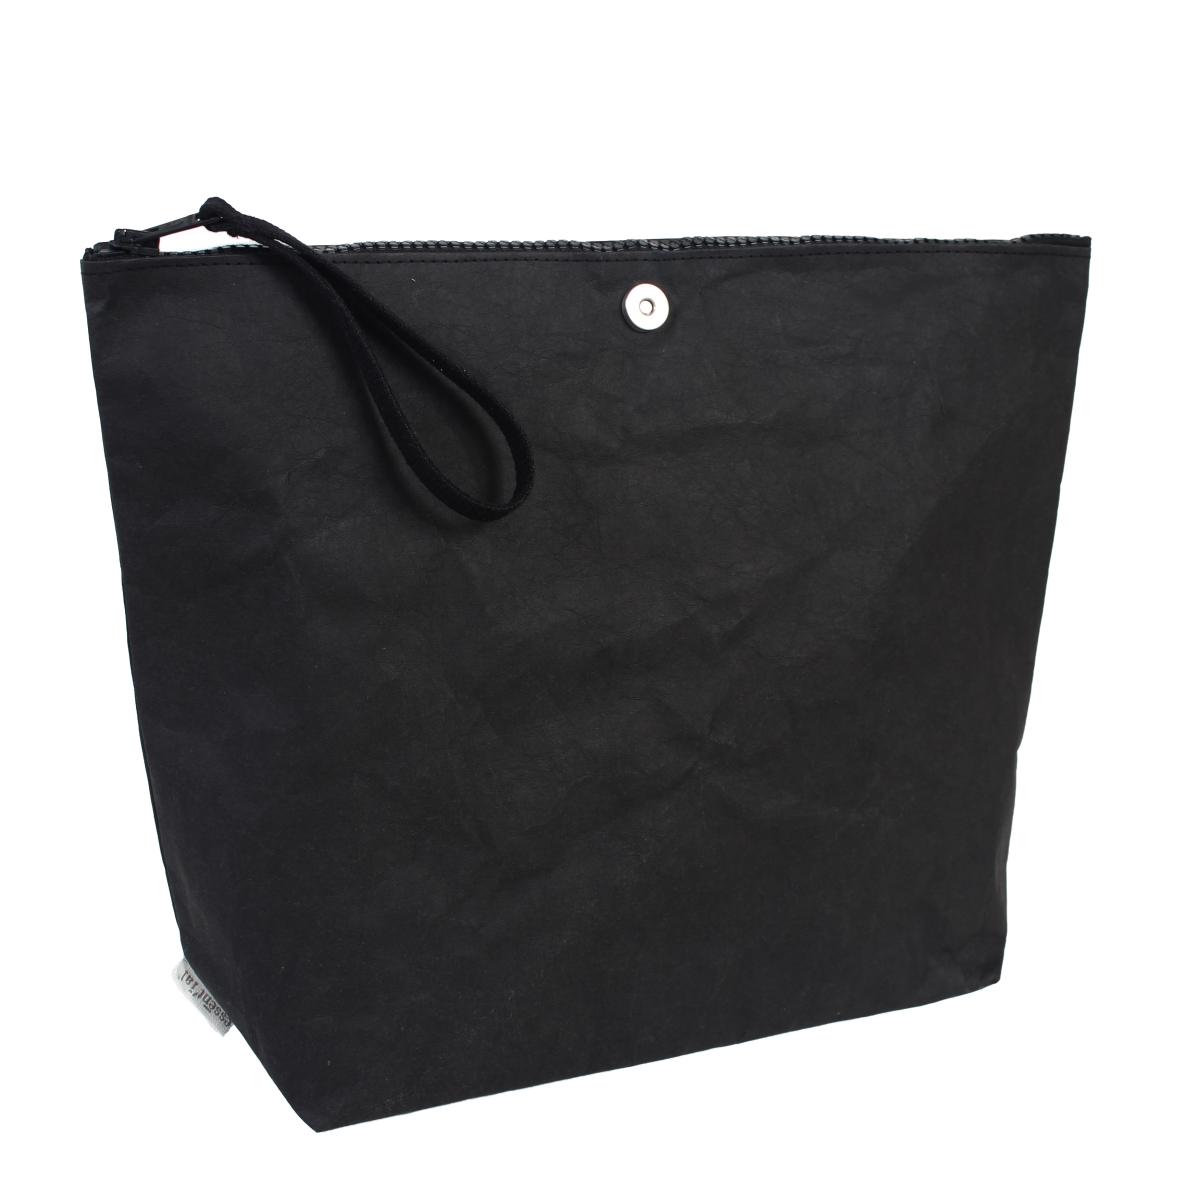 Essential Es001908 Bag Nero Handbags, 43.5 X 12 X 33.5 Cm